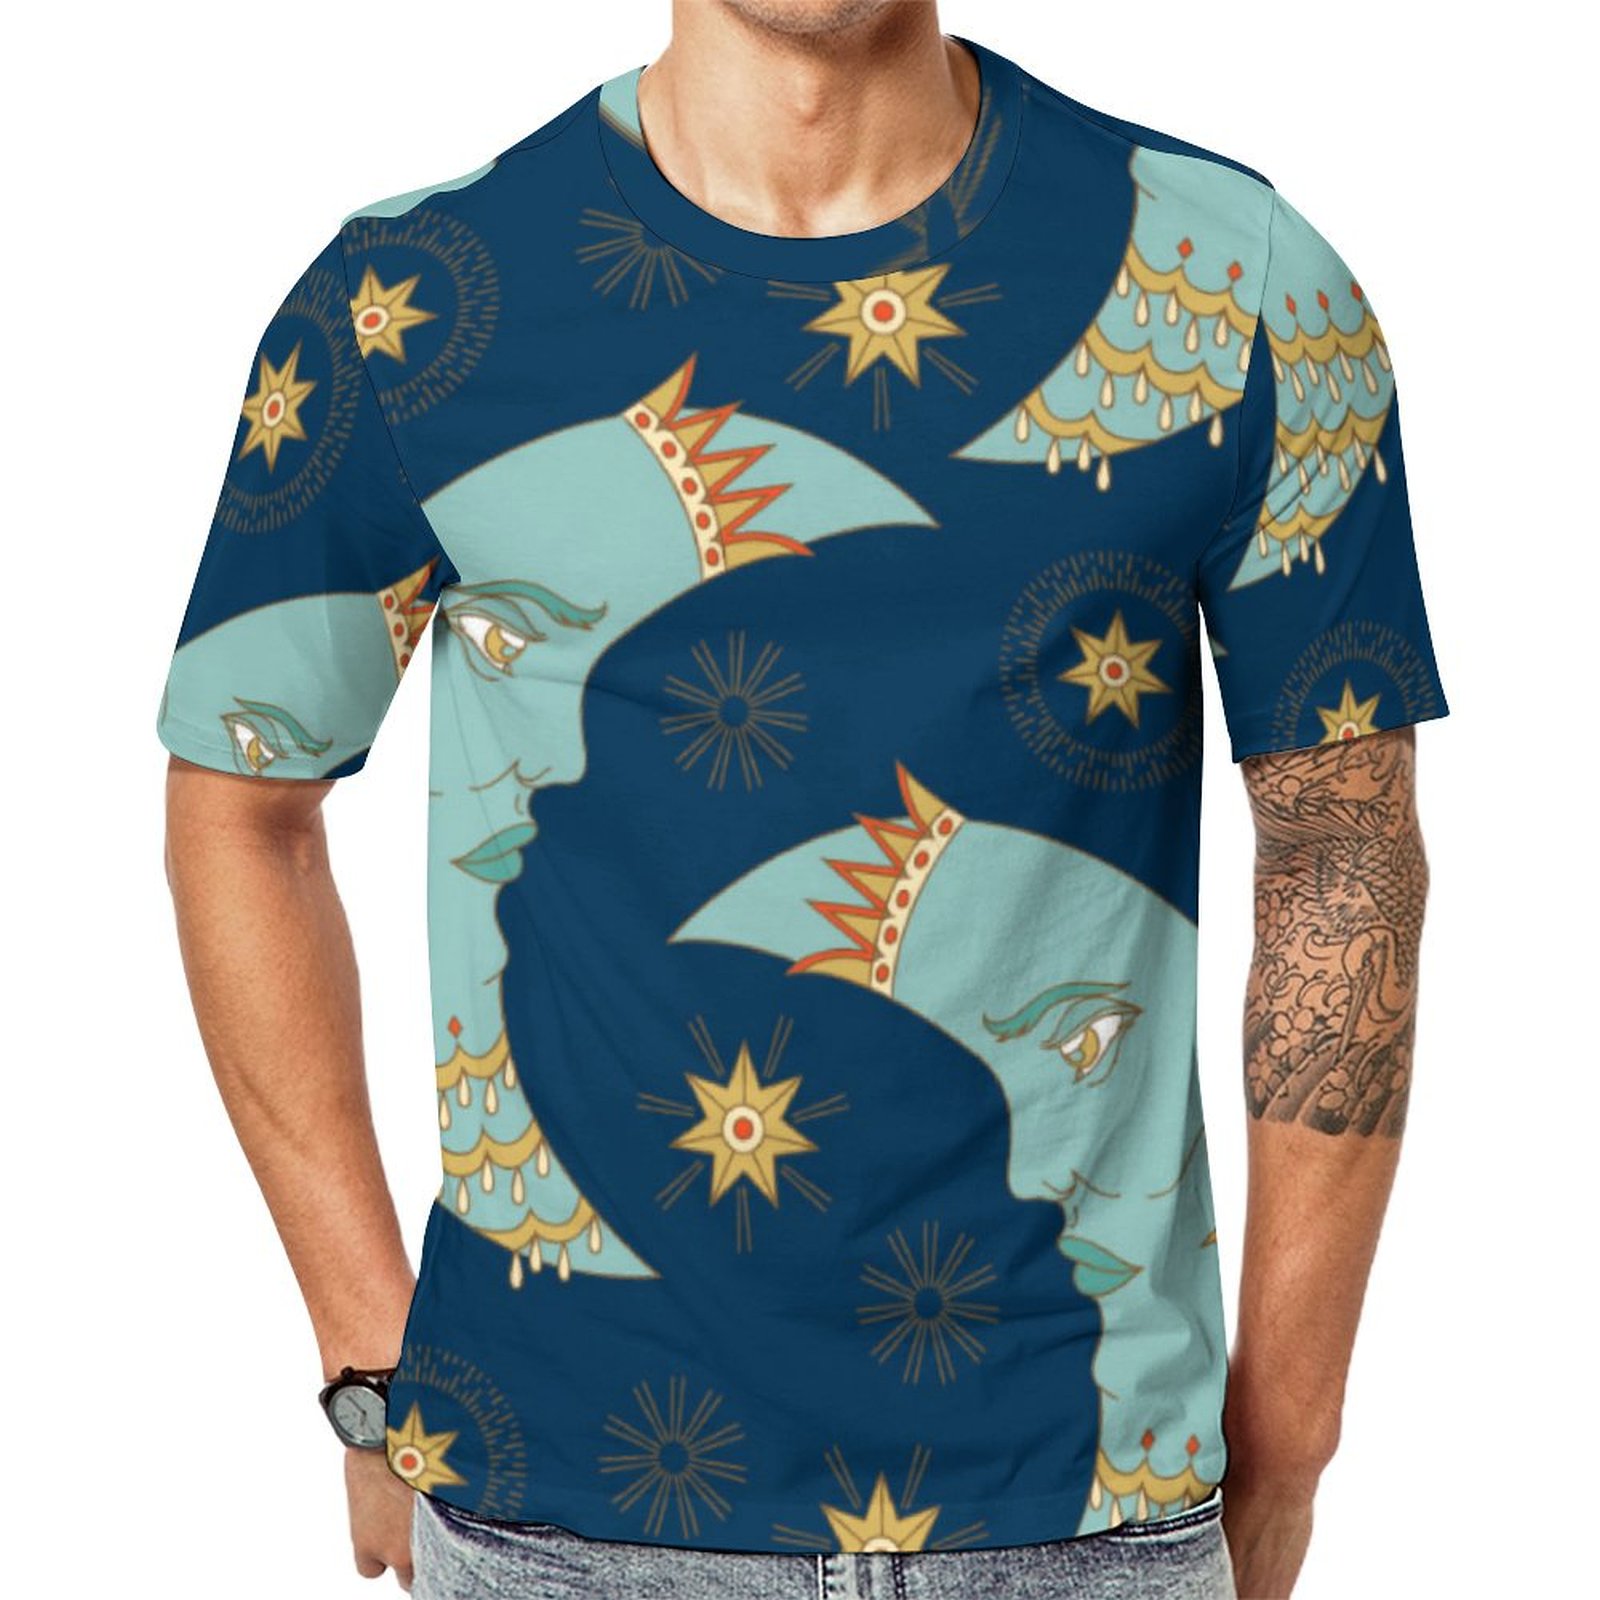 Lady Moon Bohemian Crescent Moon Short Sleeve Print Unisex Tshirt Summer Casual Tees for Men and Women Coolcoshirts